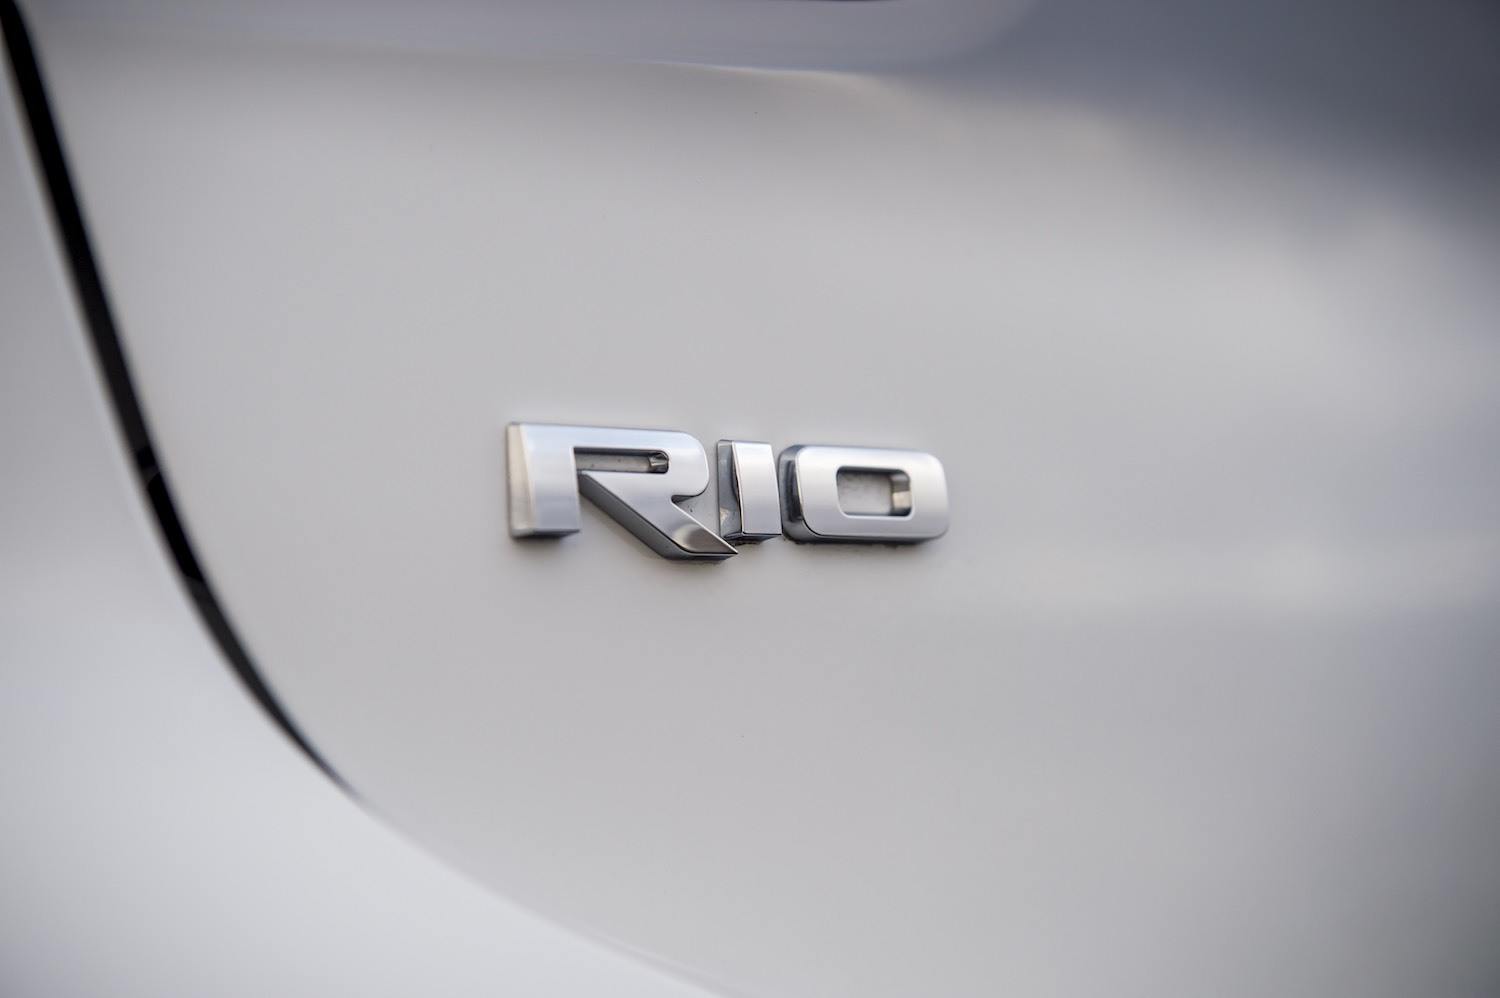 Neil Lyndon reviews the Kia Rio 1.4 CRDi 3 Eco for Drive 17